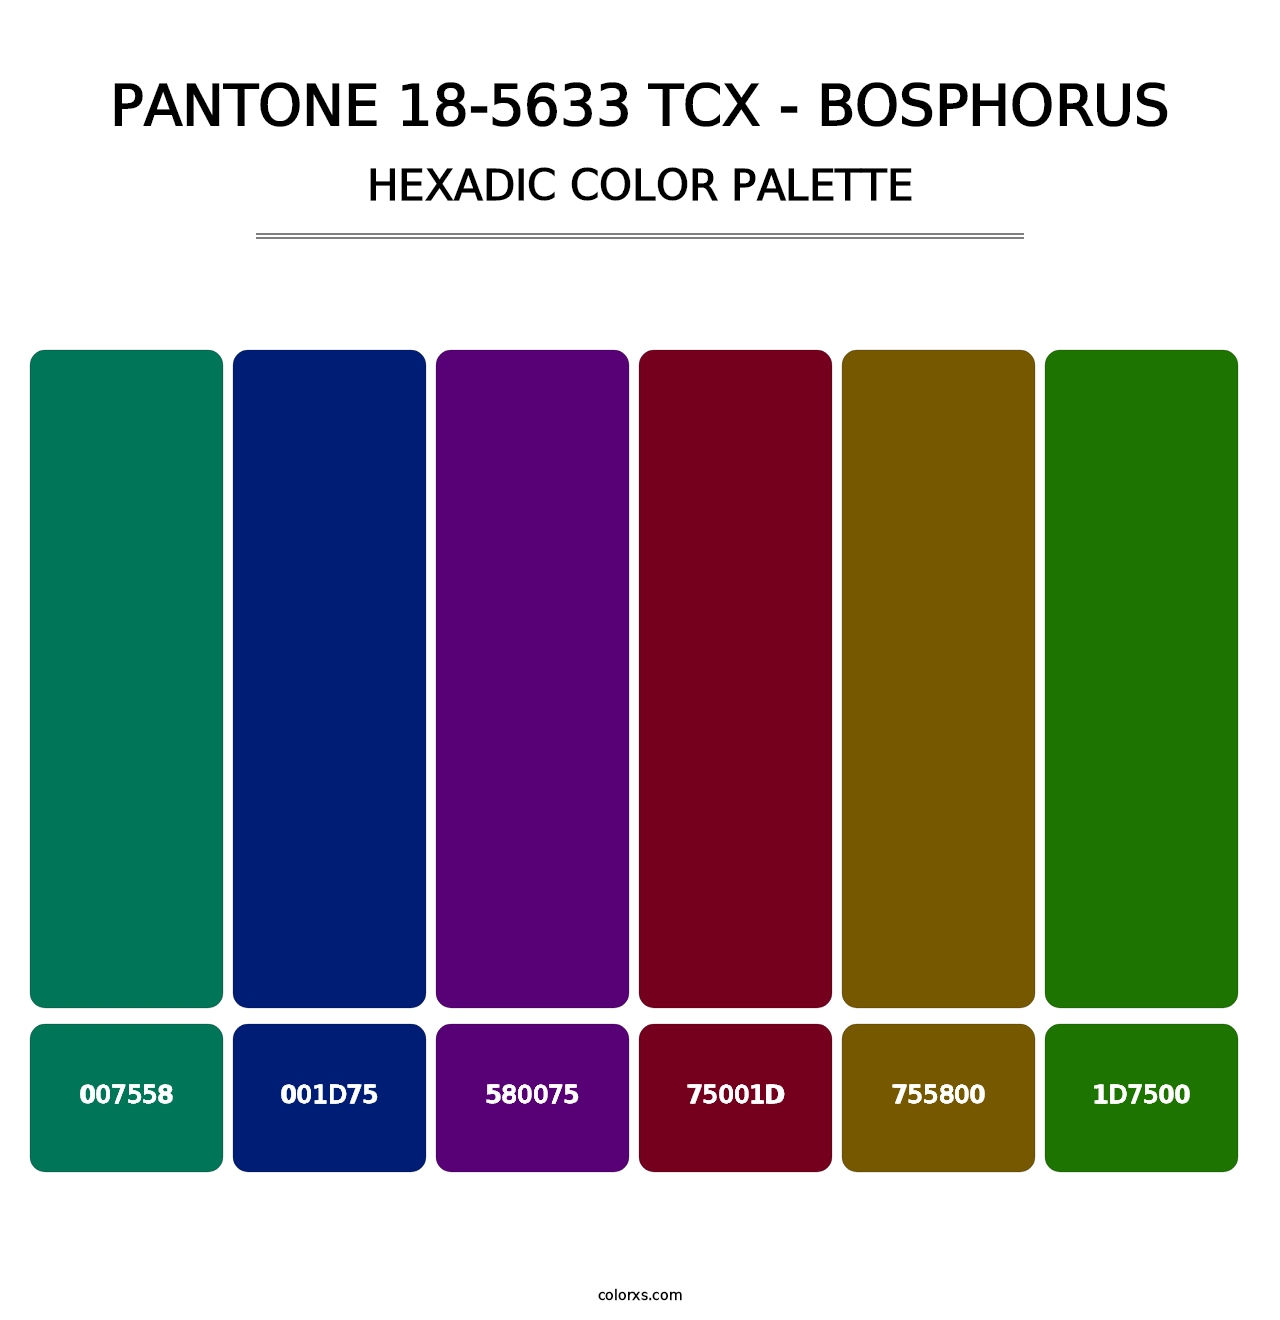 PANTONE 18-5633 TCX - Bosphorus - Hexadic Color Palette